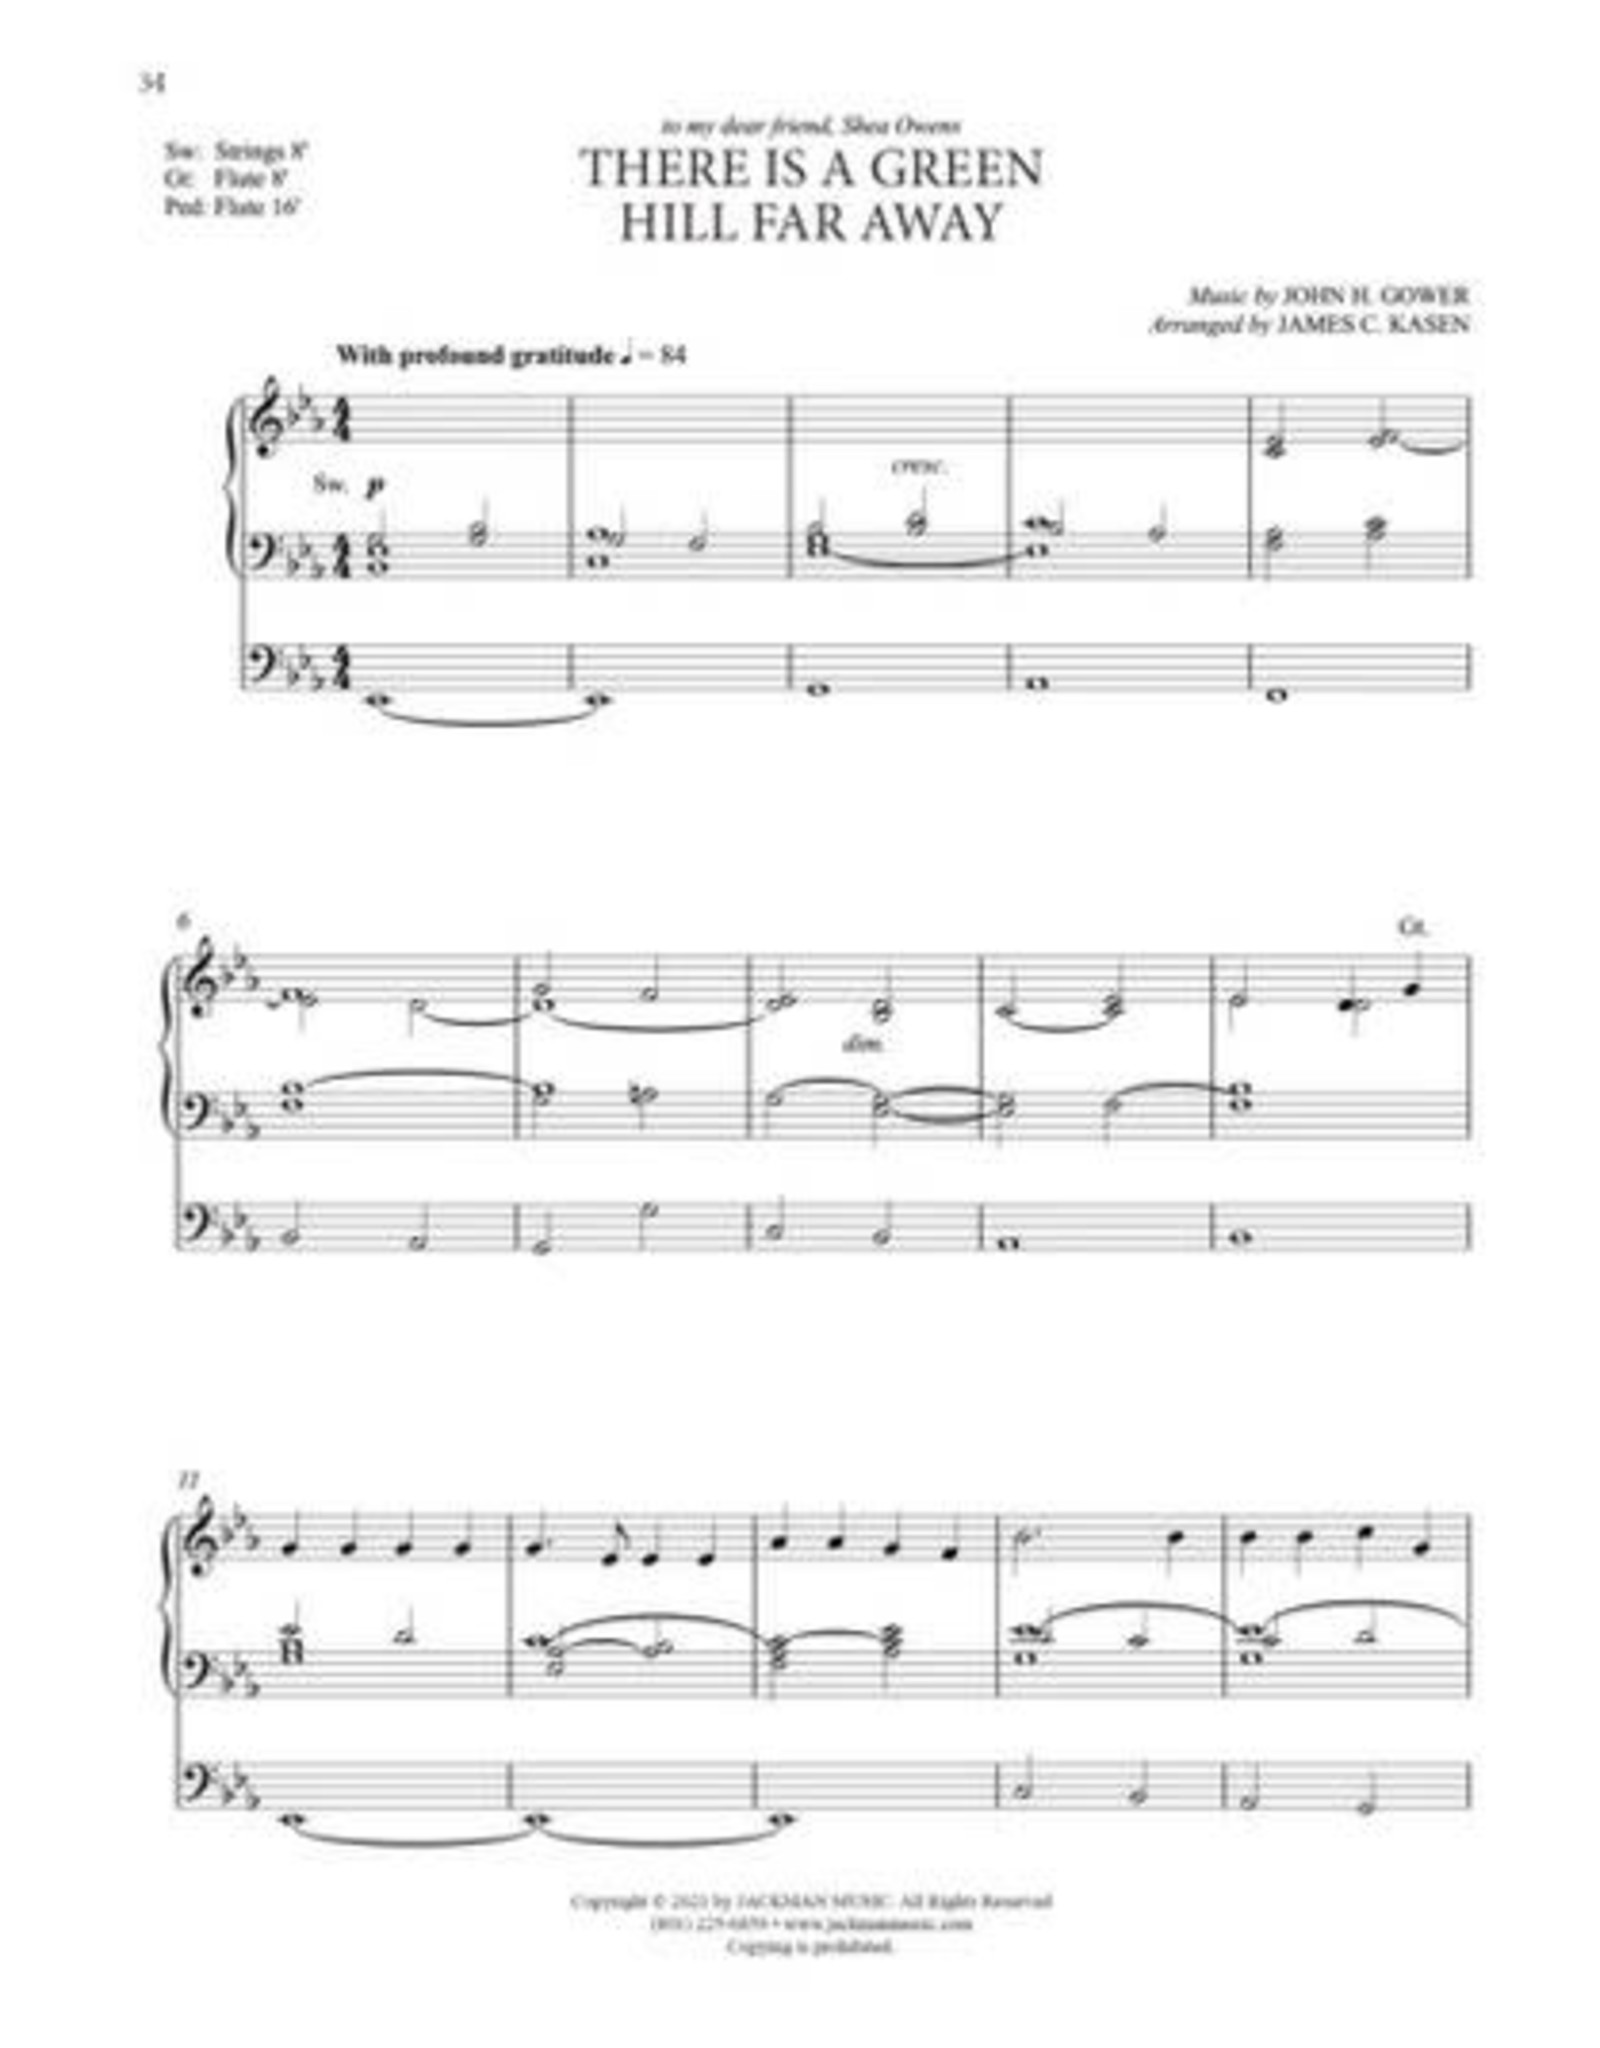 Jackman Music Organ Postludes for Church Services Vol. 8 arr. James C. Kasen